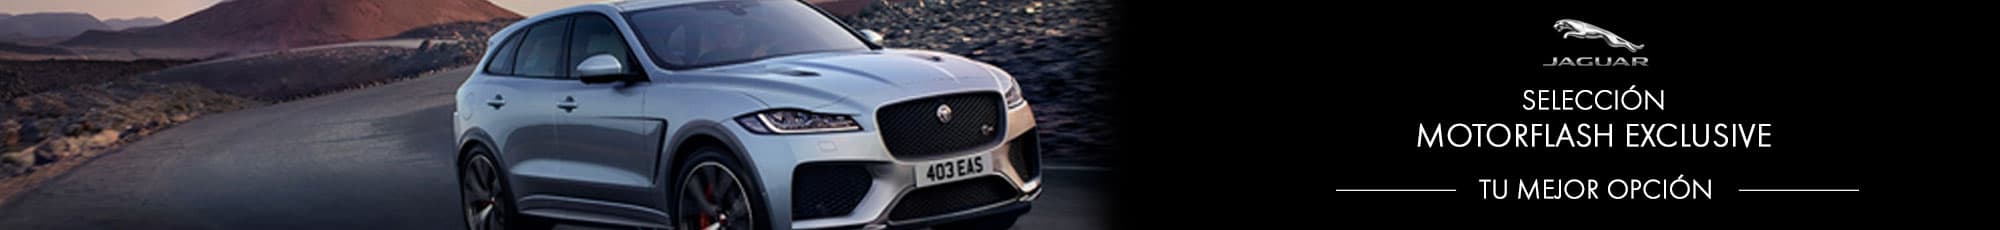 Motorflash exclusive de la marca Jaguar